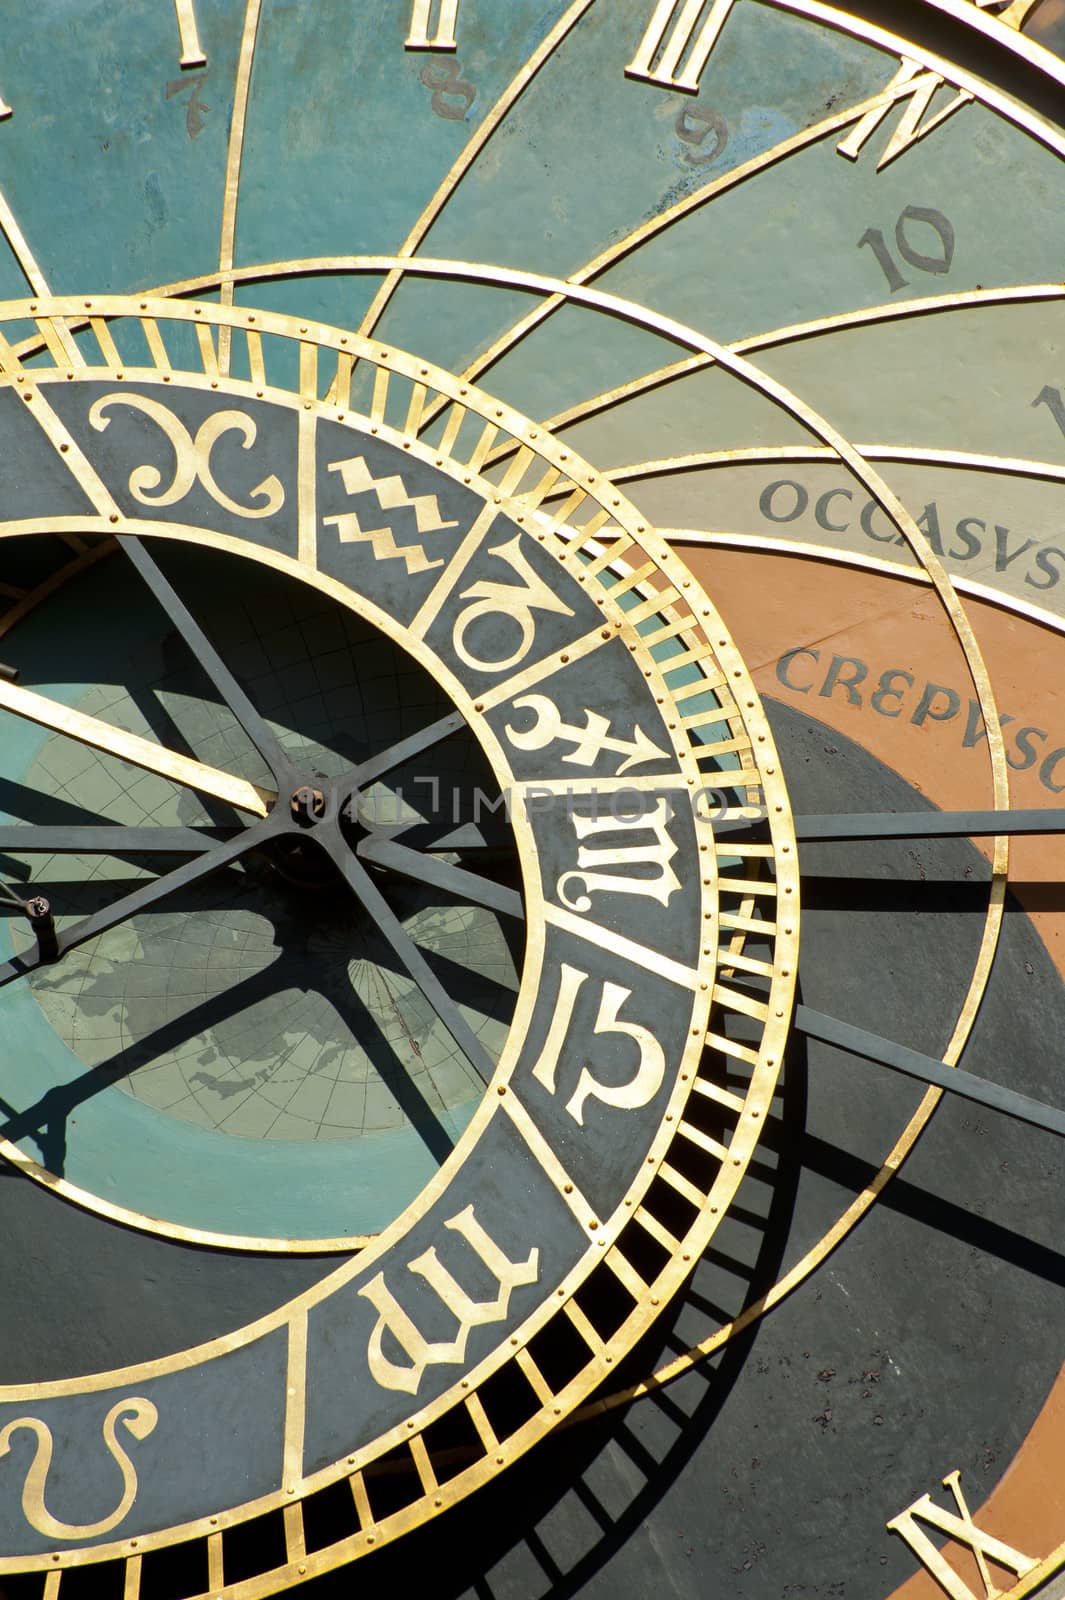 Detail of astronomical clock in Prague, Czech republic